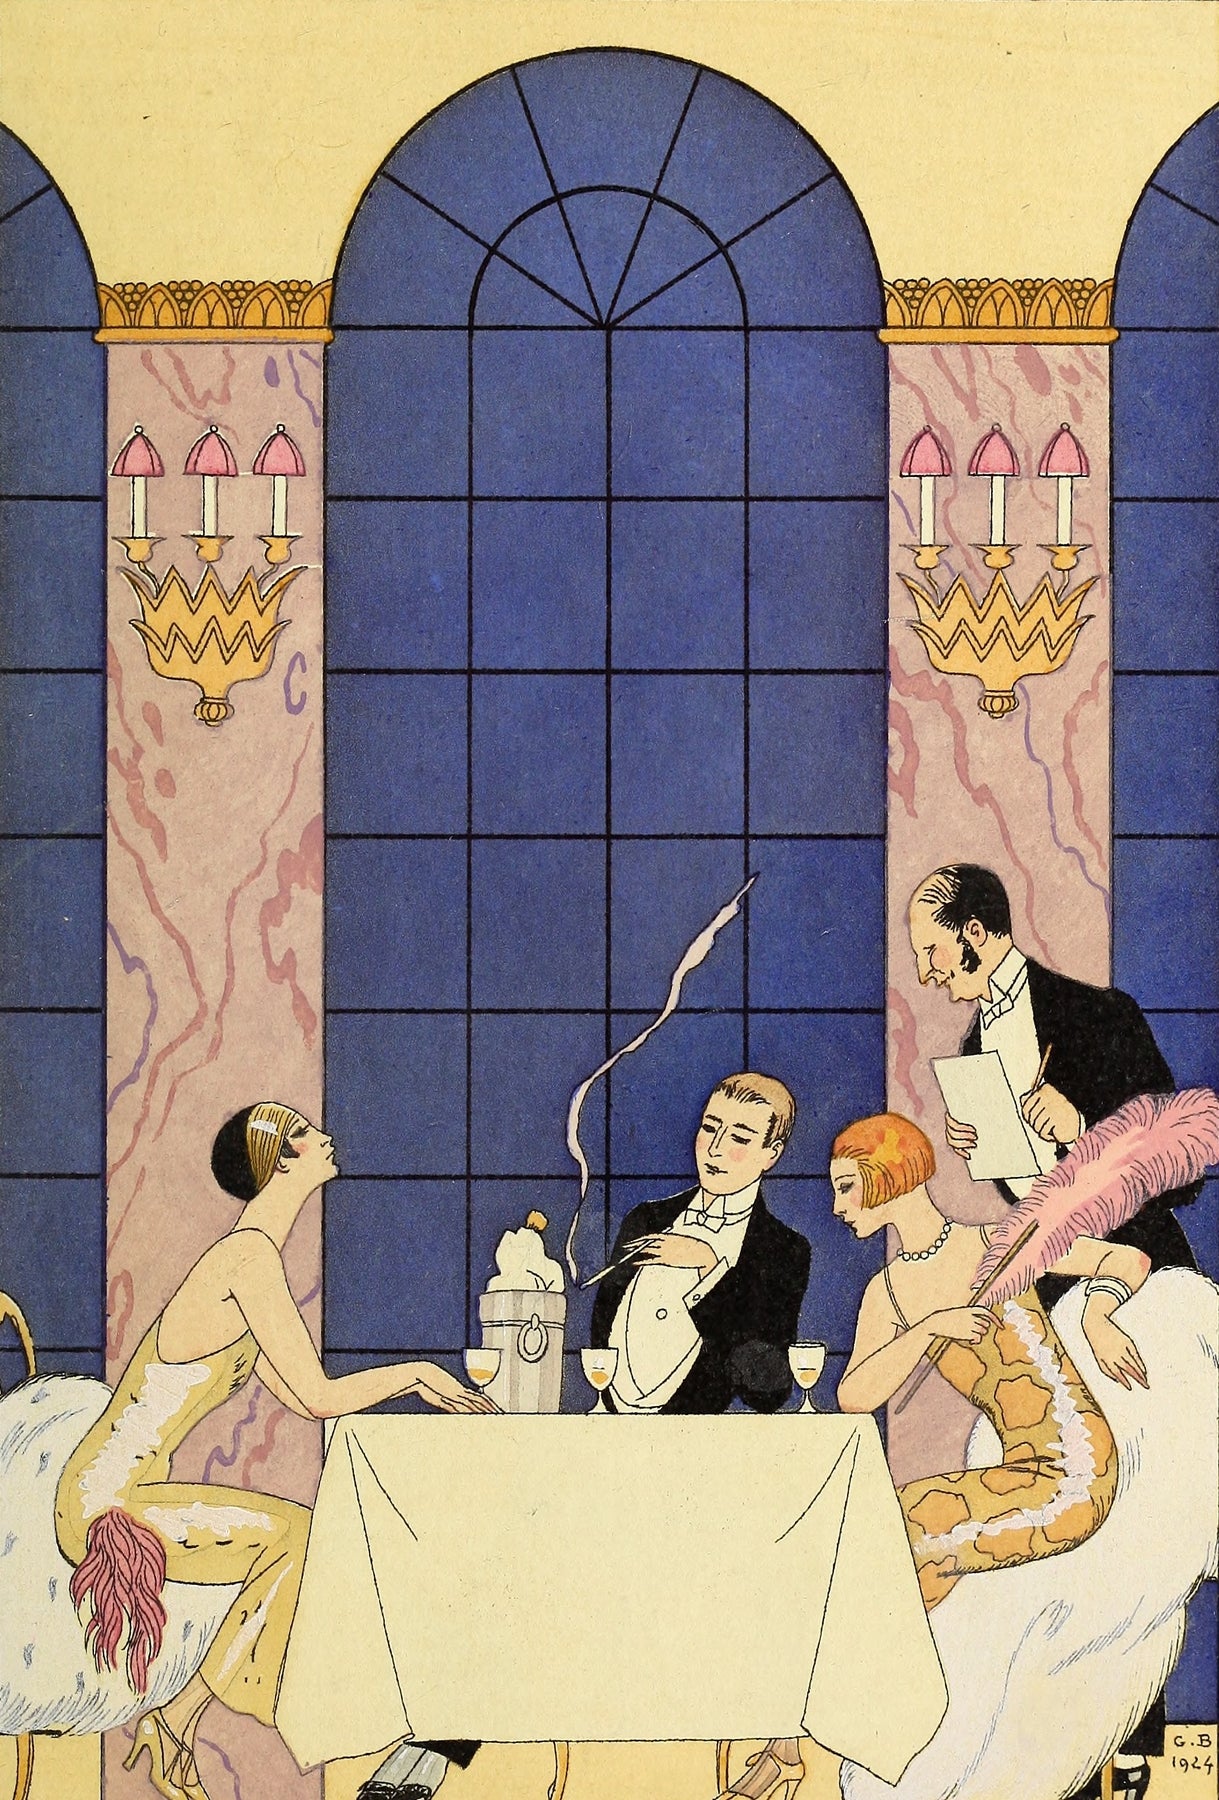 La Gourmandise (1920s) | Art deco wall art | George Barbier Posters, Prints, & Visual Artwork The Trumpet Shop   